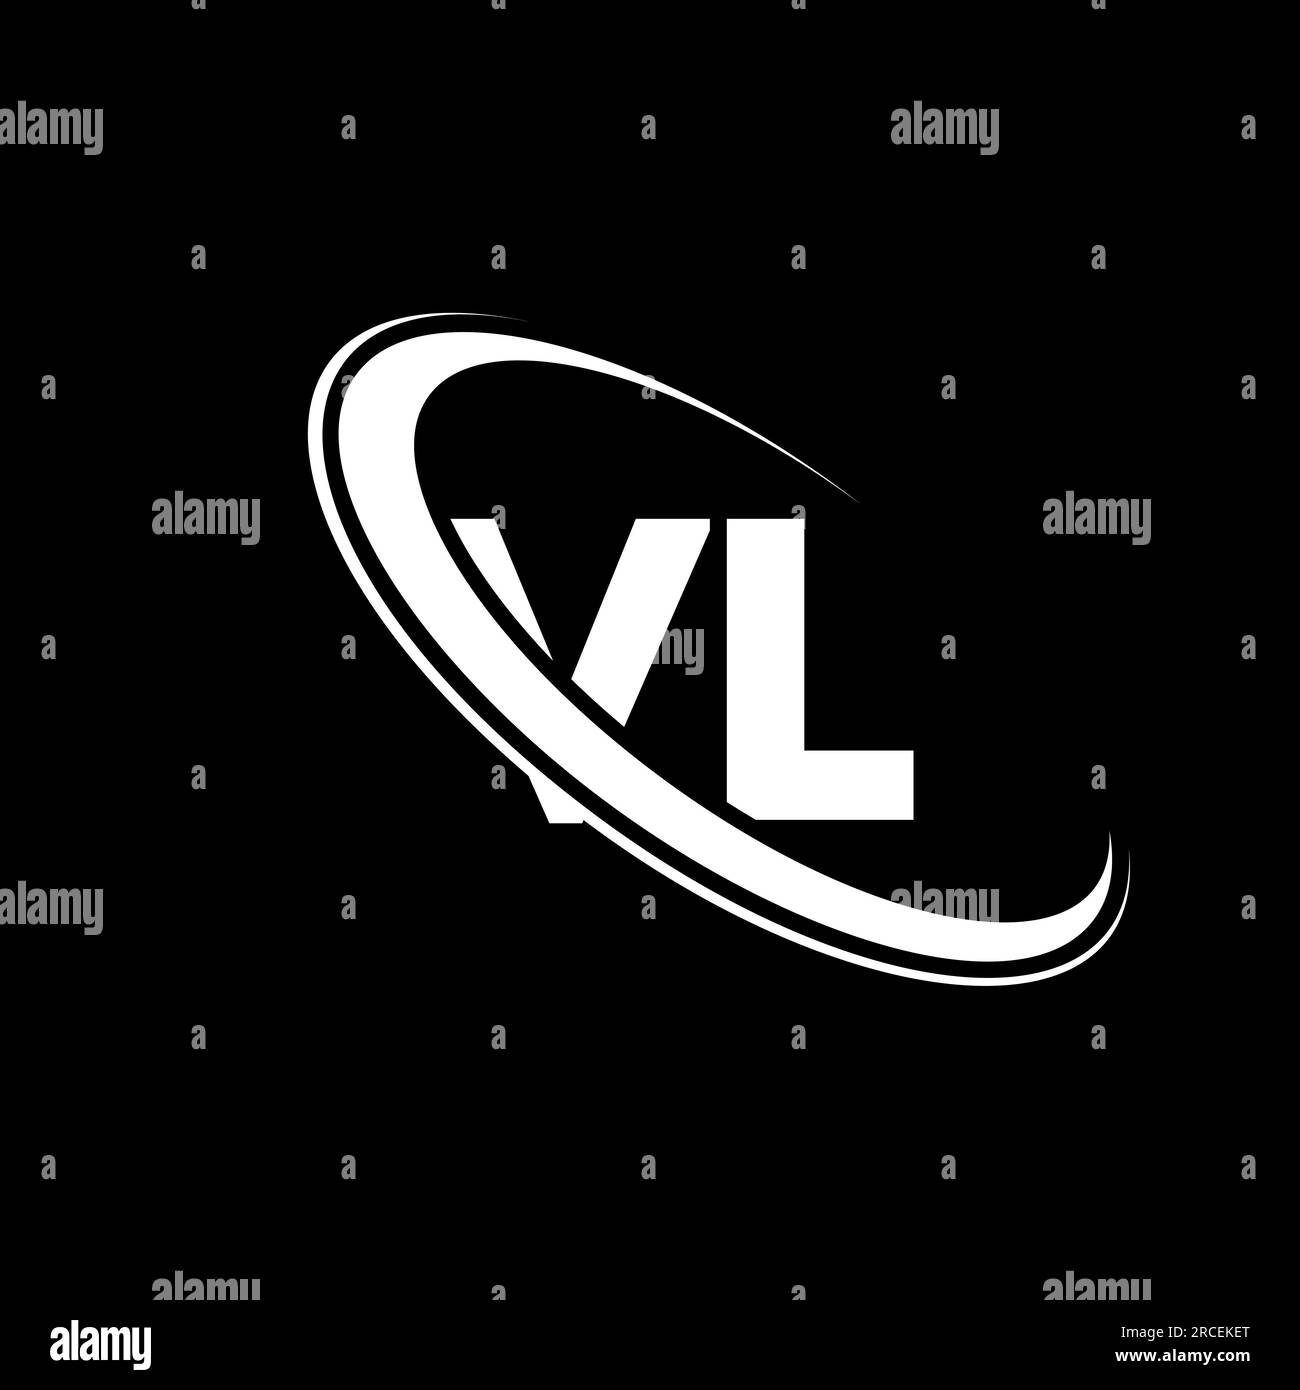 Premium Vector  Vl letters vector logo free download unlock the elegance  onogram logo